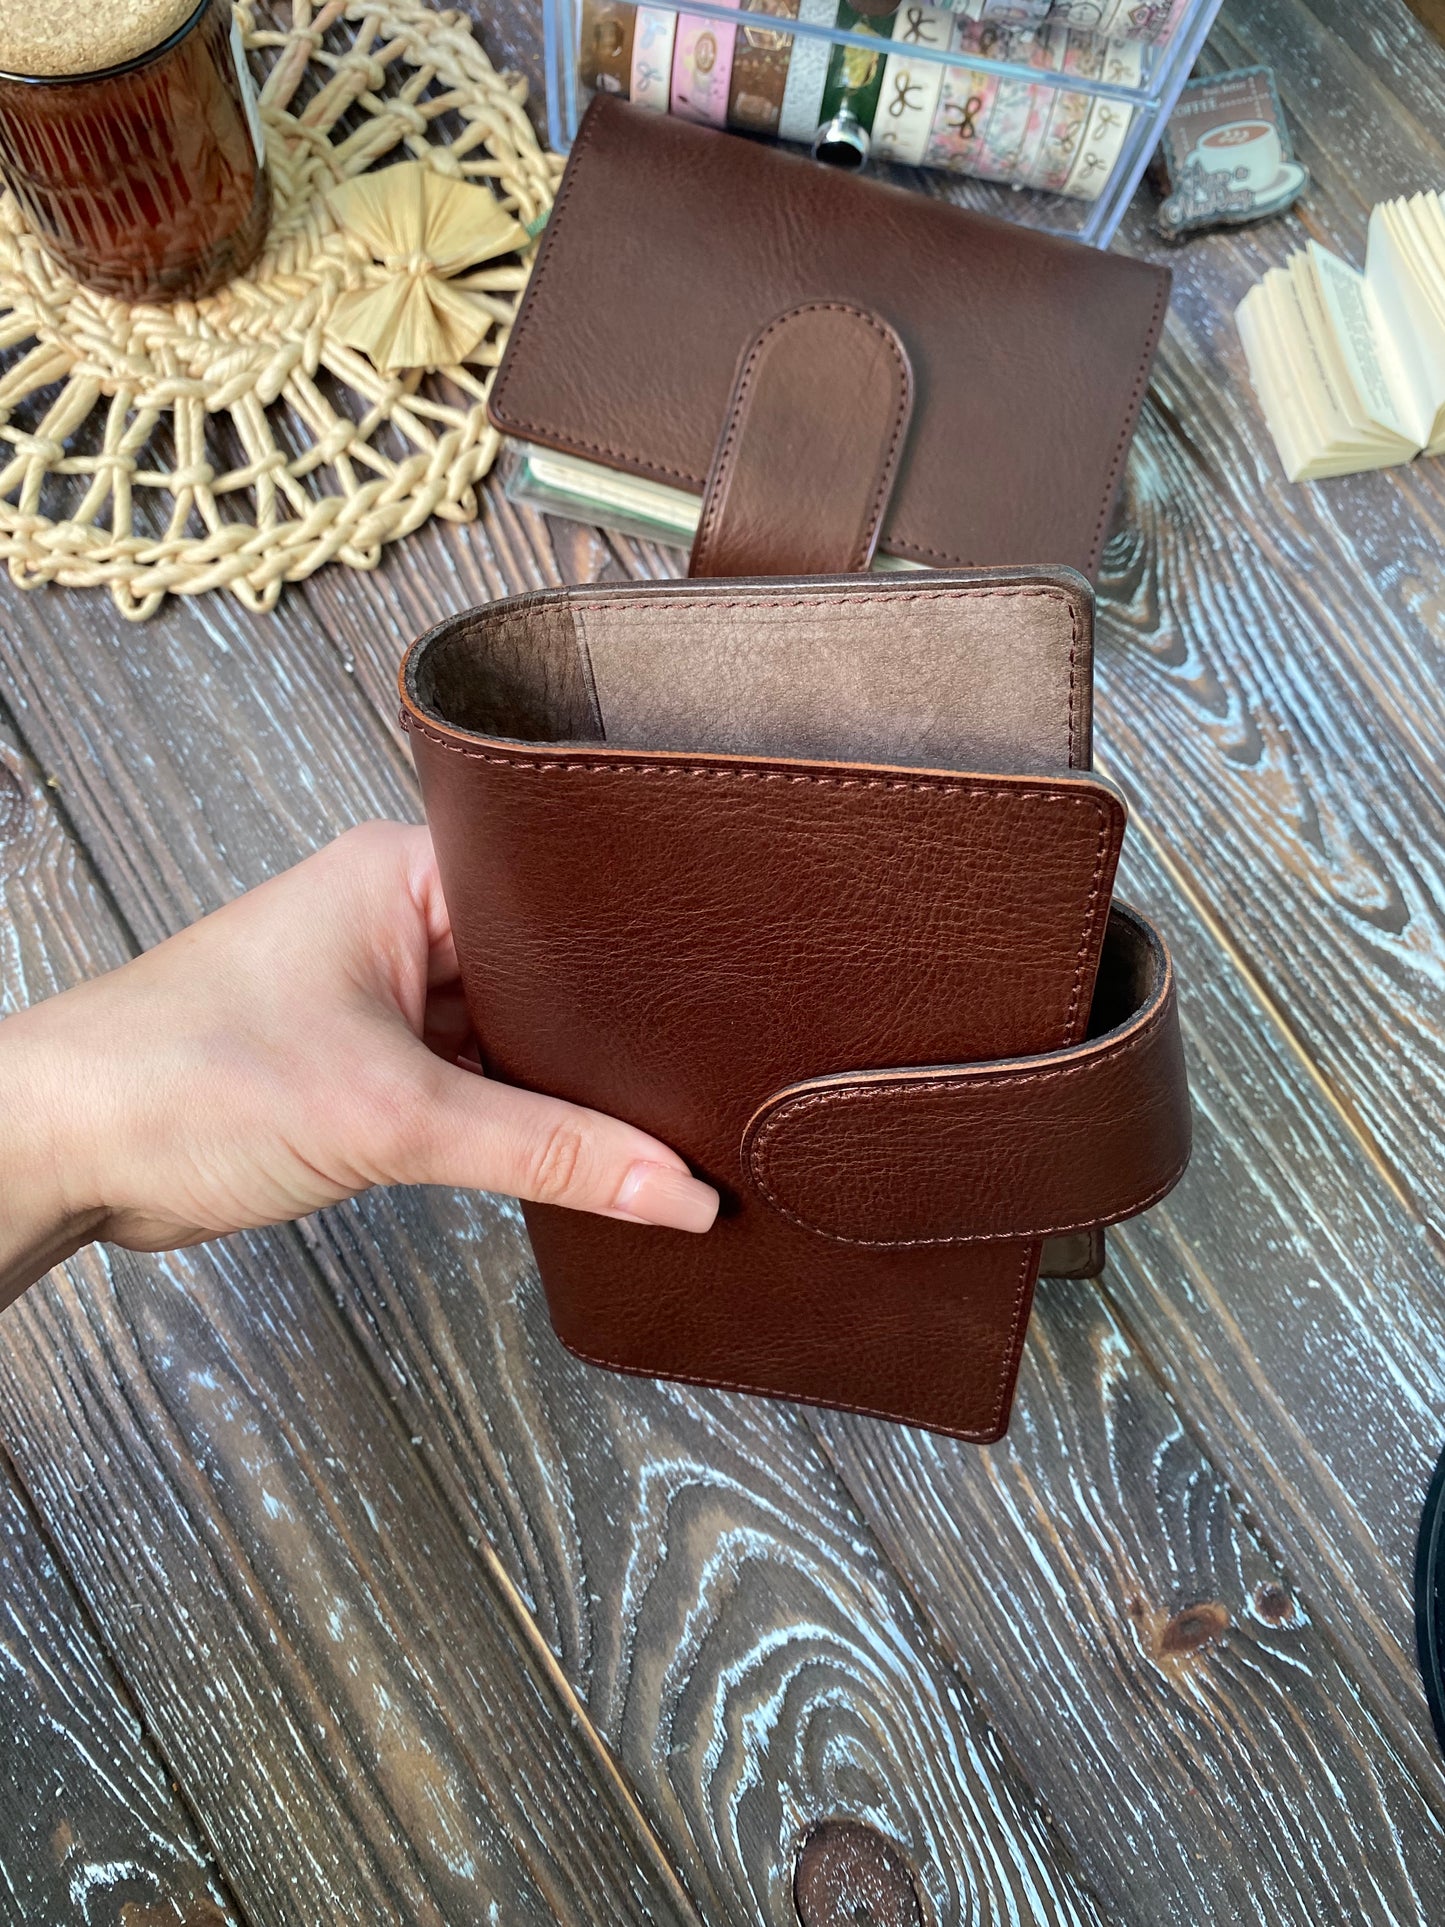 Moleskine pocket TN cover with strings Veg tan outside | Nubuck leather inside